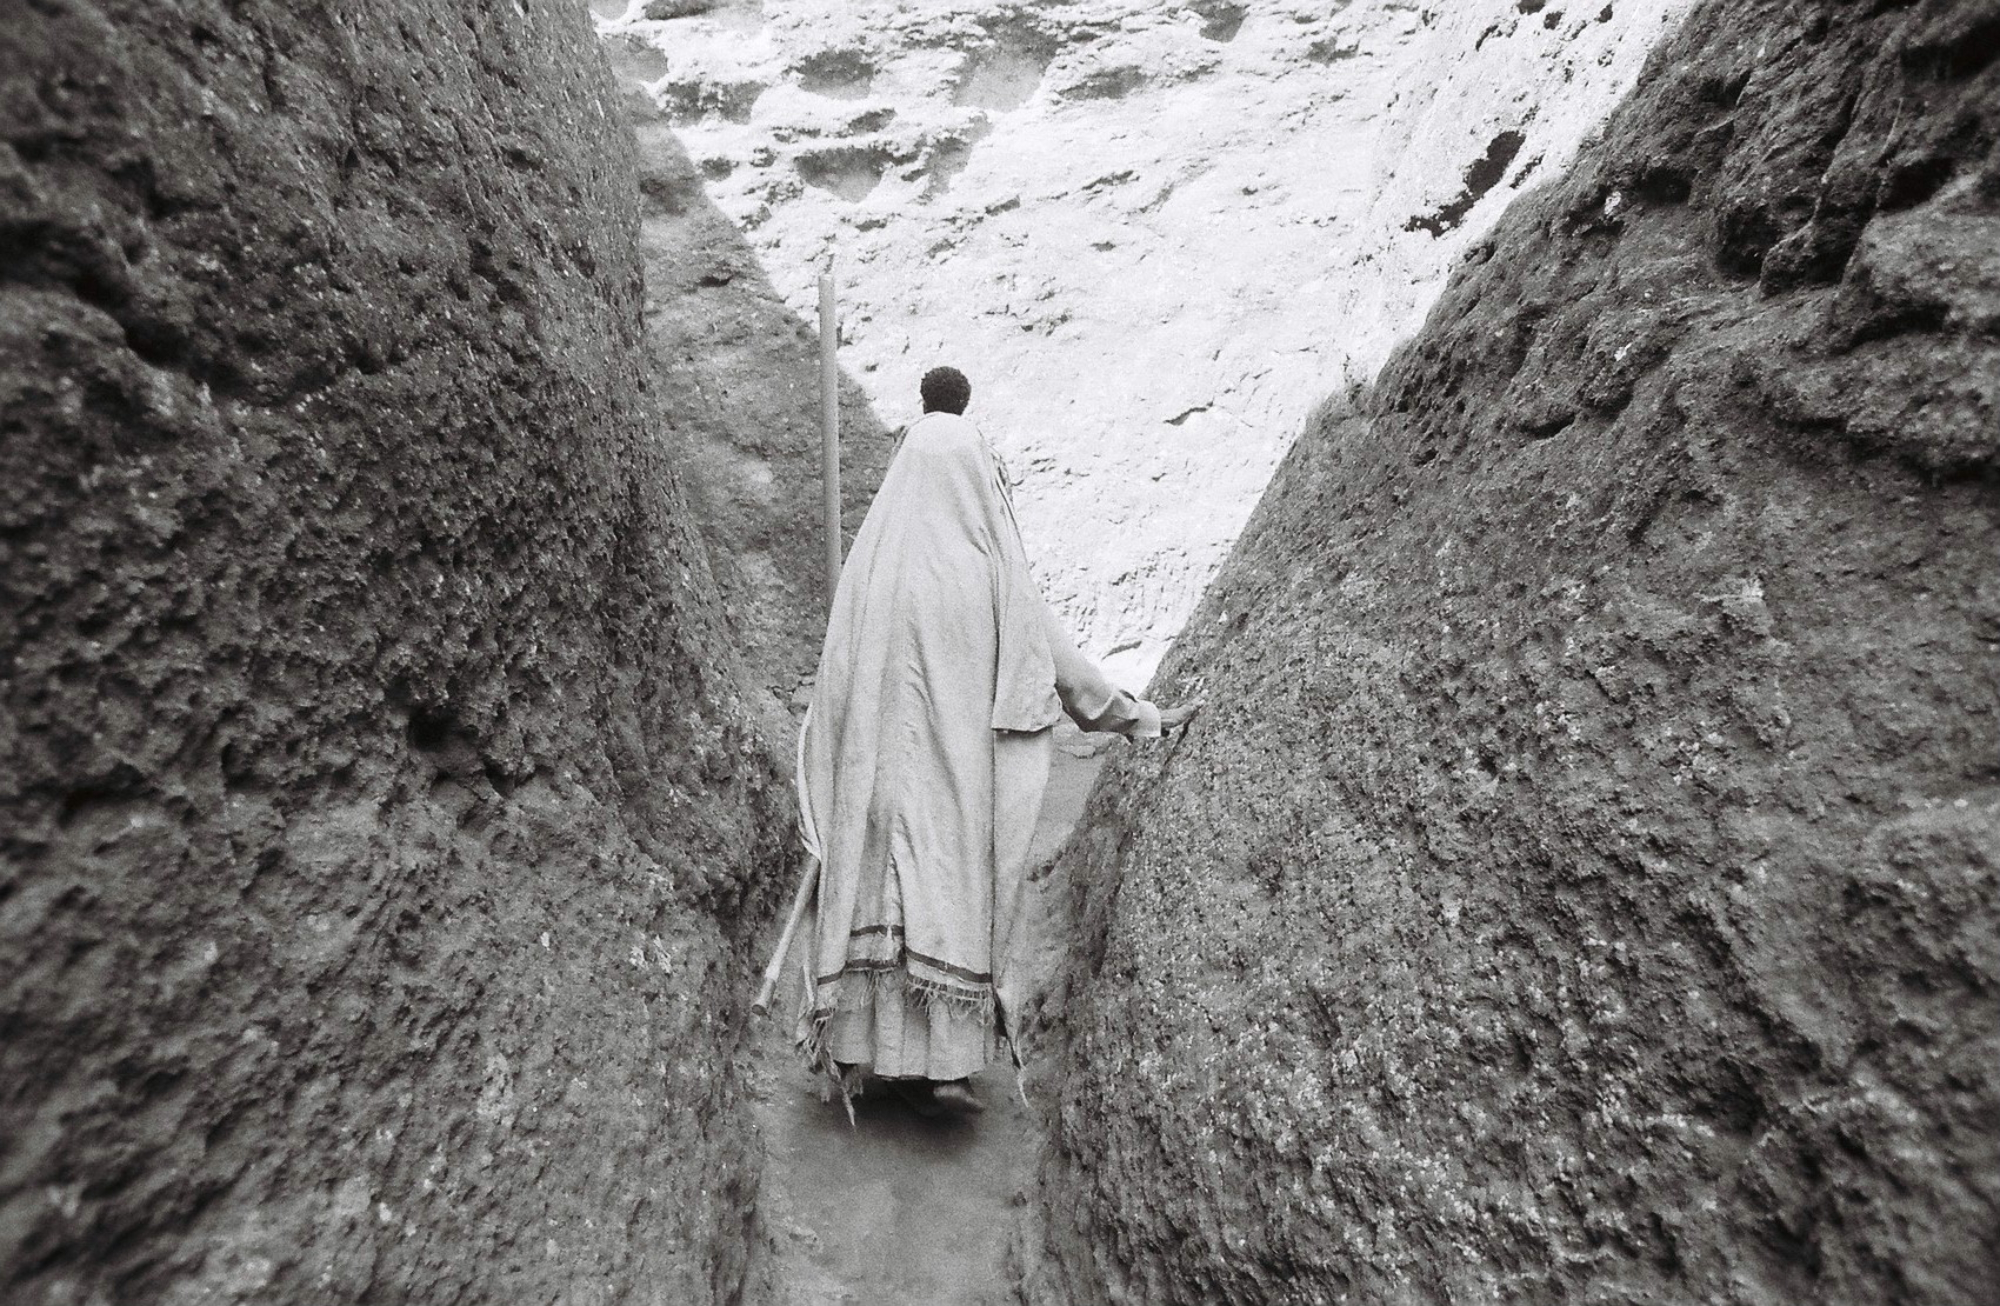  A pilgrim steadies herself as she navigates the narrow pathways within Lalibela. 